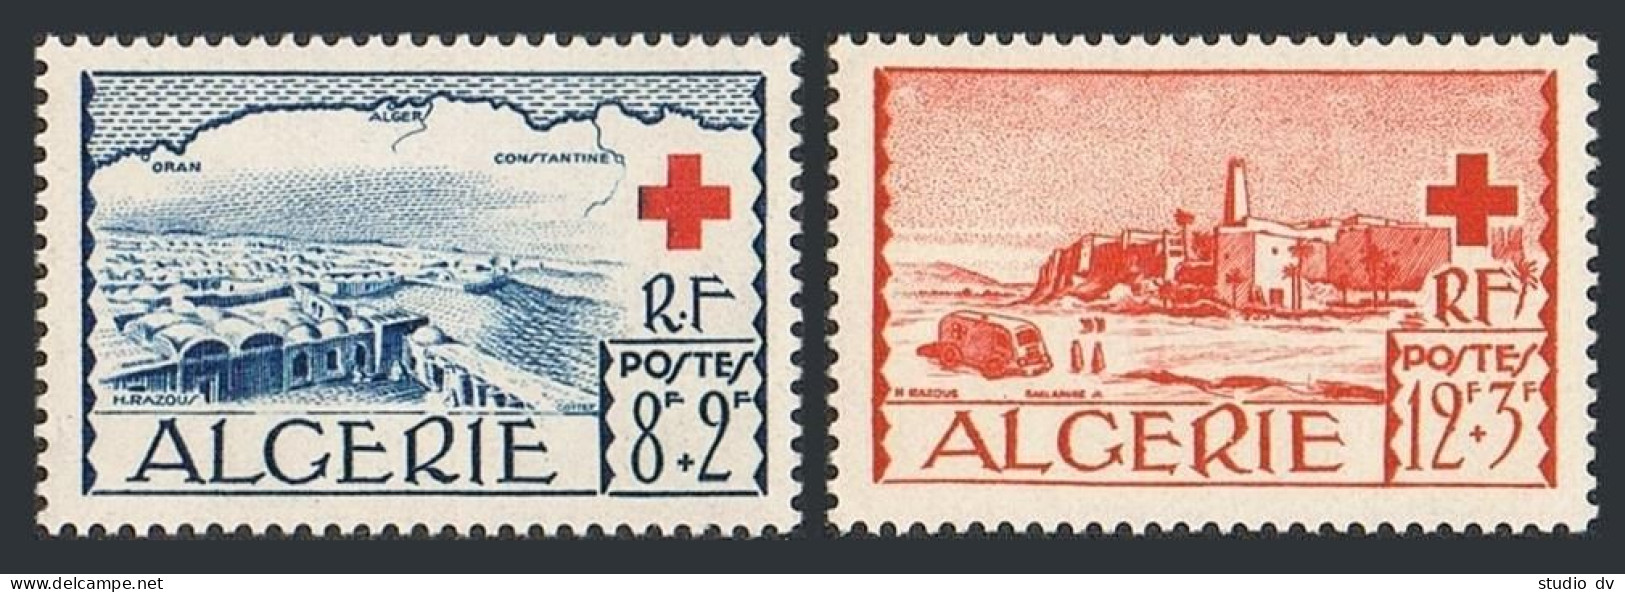 Algeria B67-B68, MNH. Mi 310-311. Red Cross 1952. View Of El Oued. Map, Truck. - Algeria (1962-...)